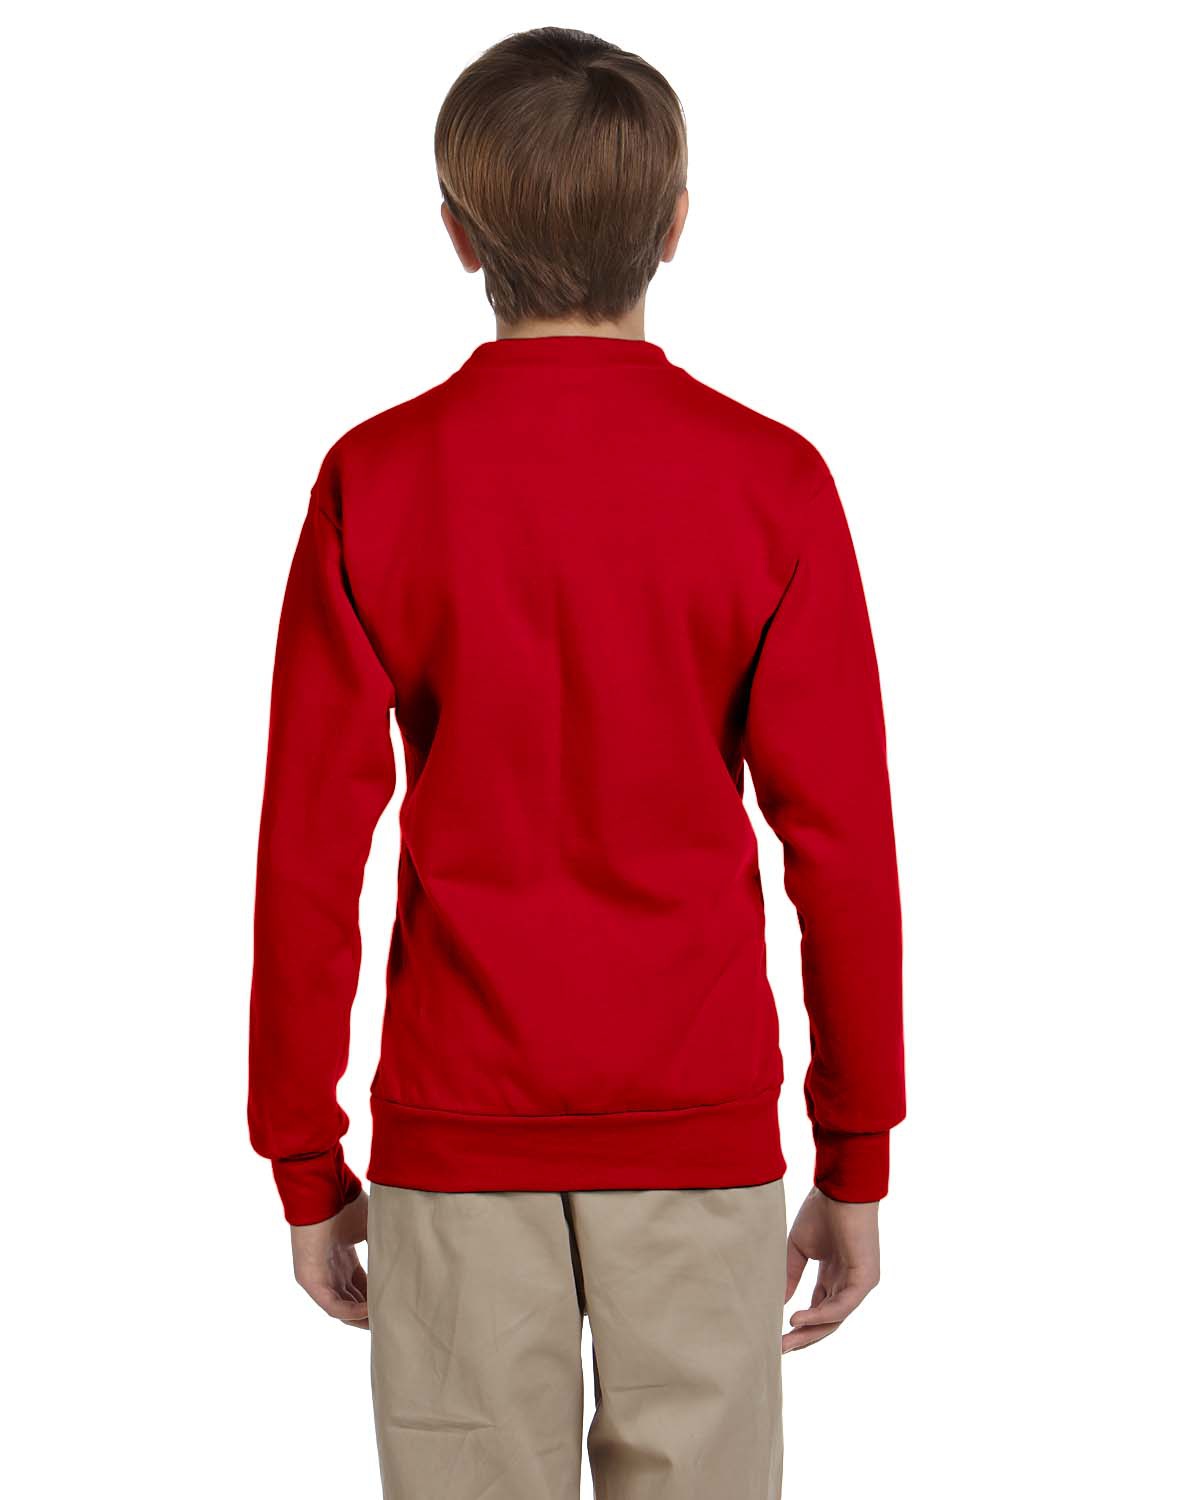 'Hanes P360 Ecosmart Youth Full Sleeve Crewneck Sweatshirt'